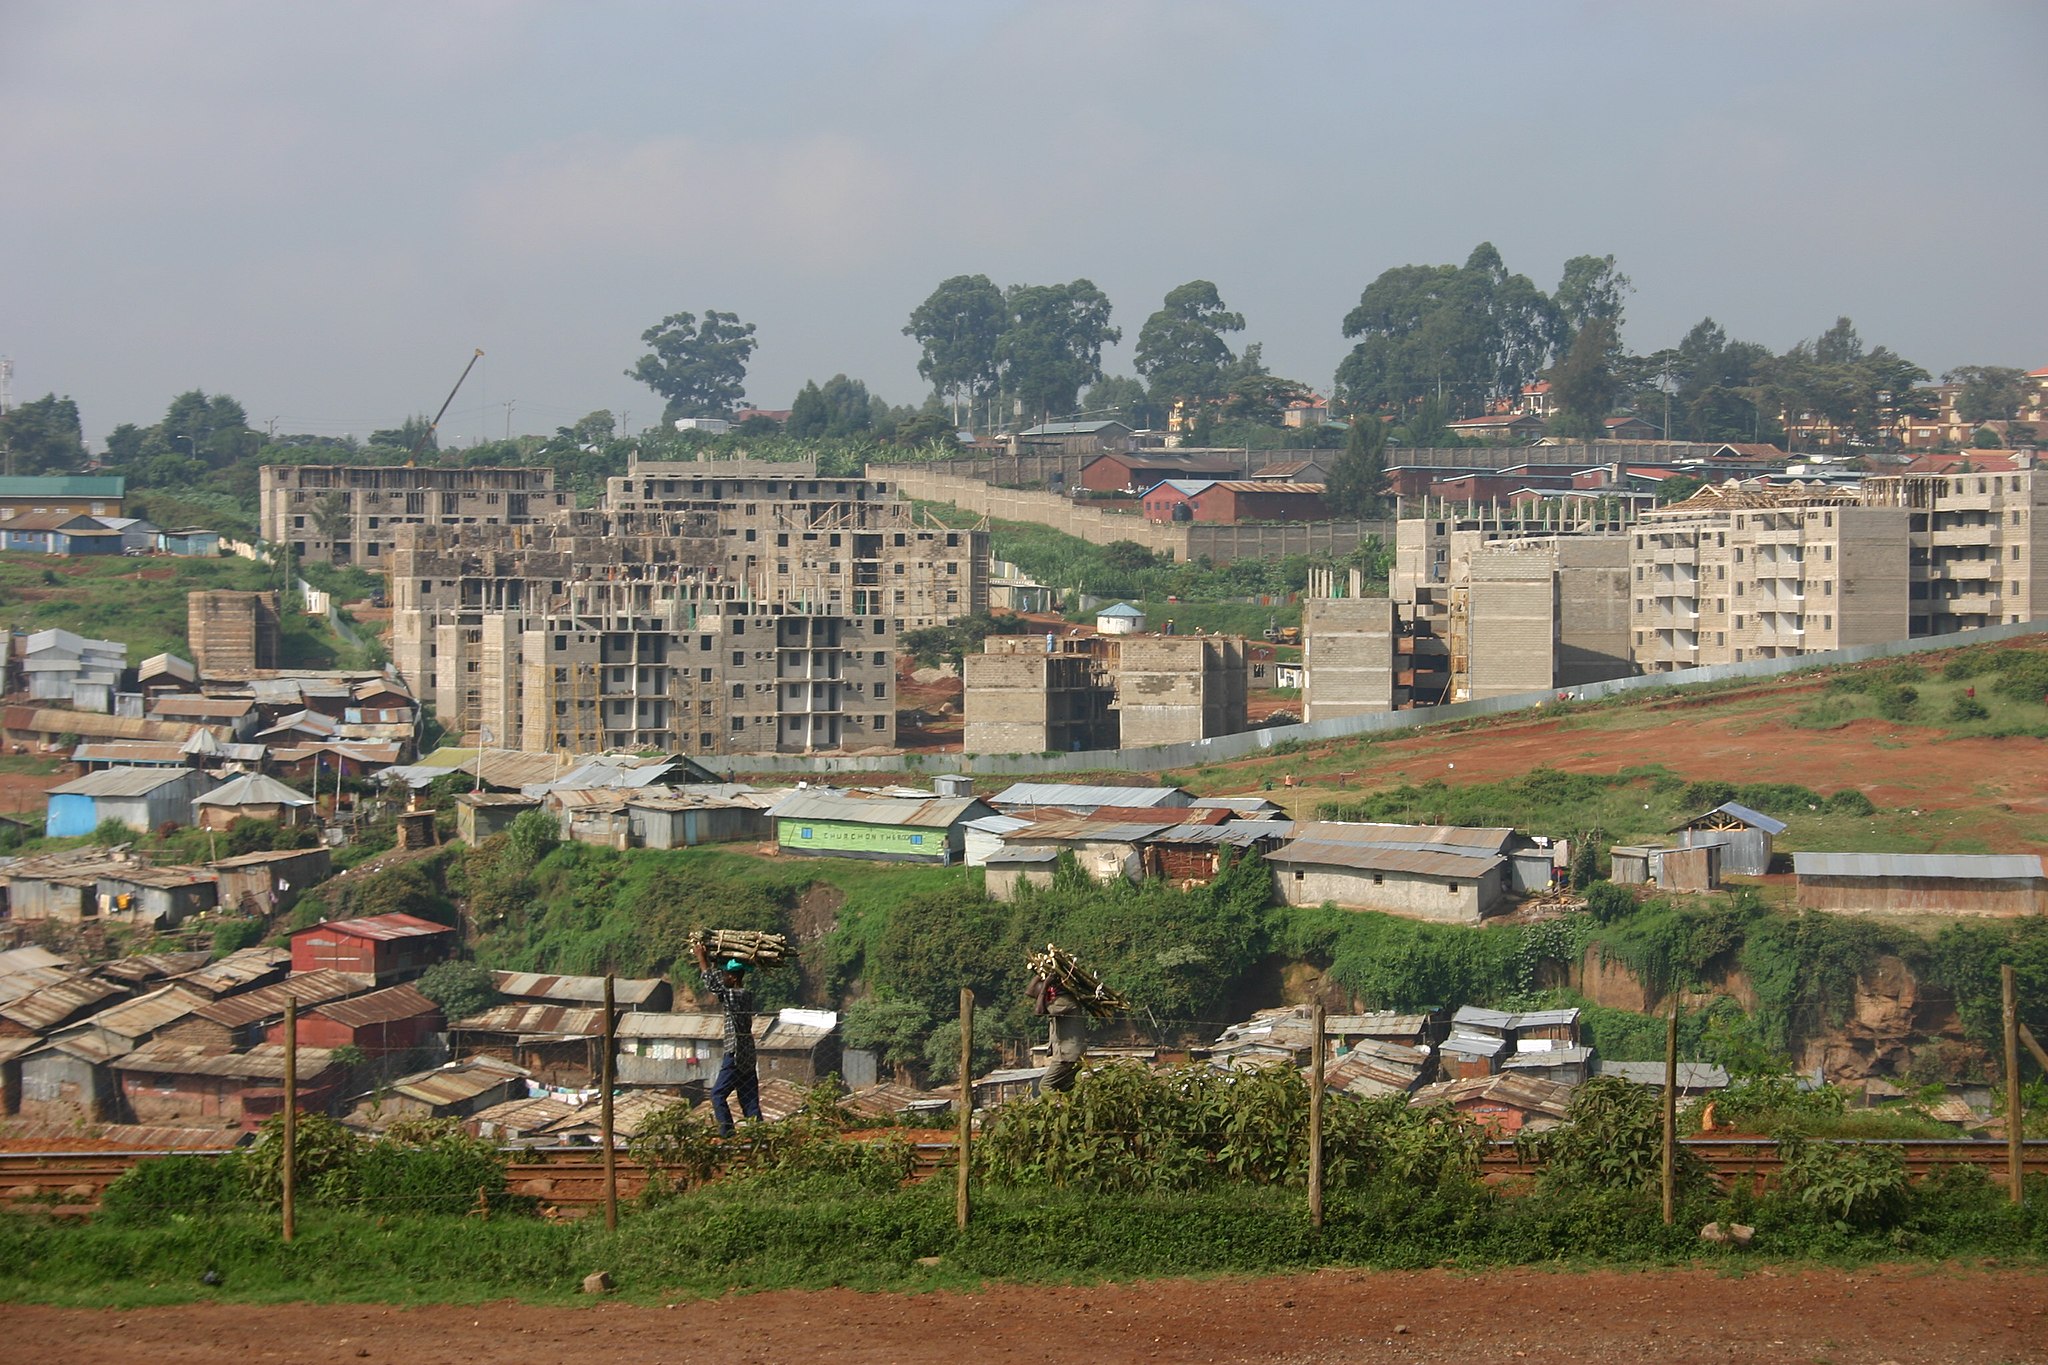 View of tower blocks under construction in Kibera, Nirobi, Kenya